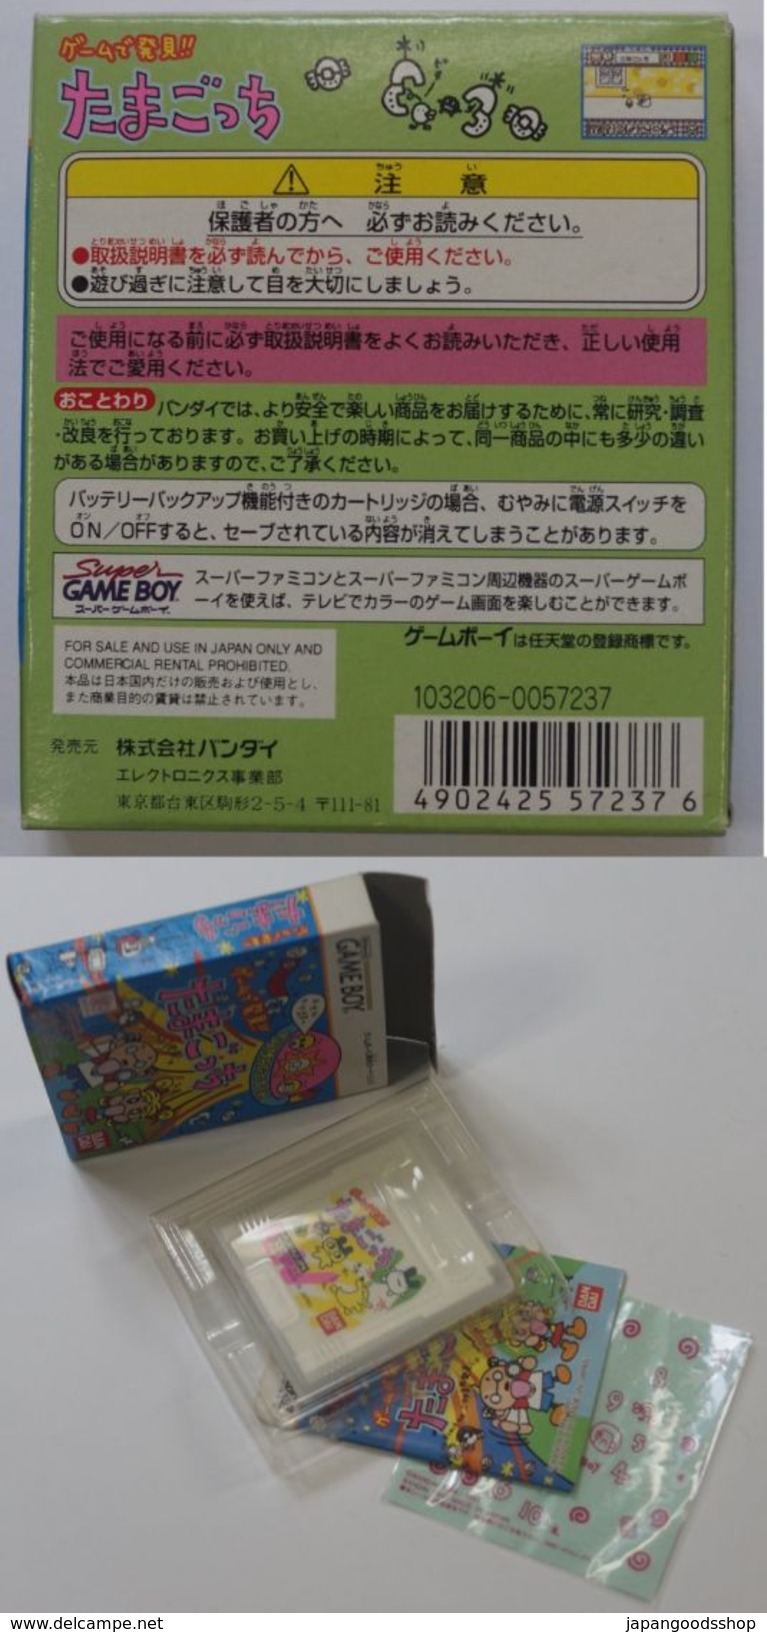 Game Boy Japanese : Game De Hakken !! Tamagotchi DMG-ATAJ-JPN - Nintendo Game Boy